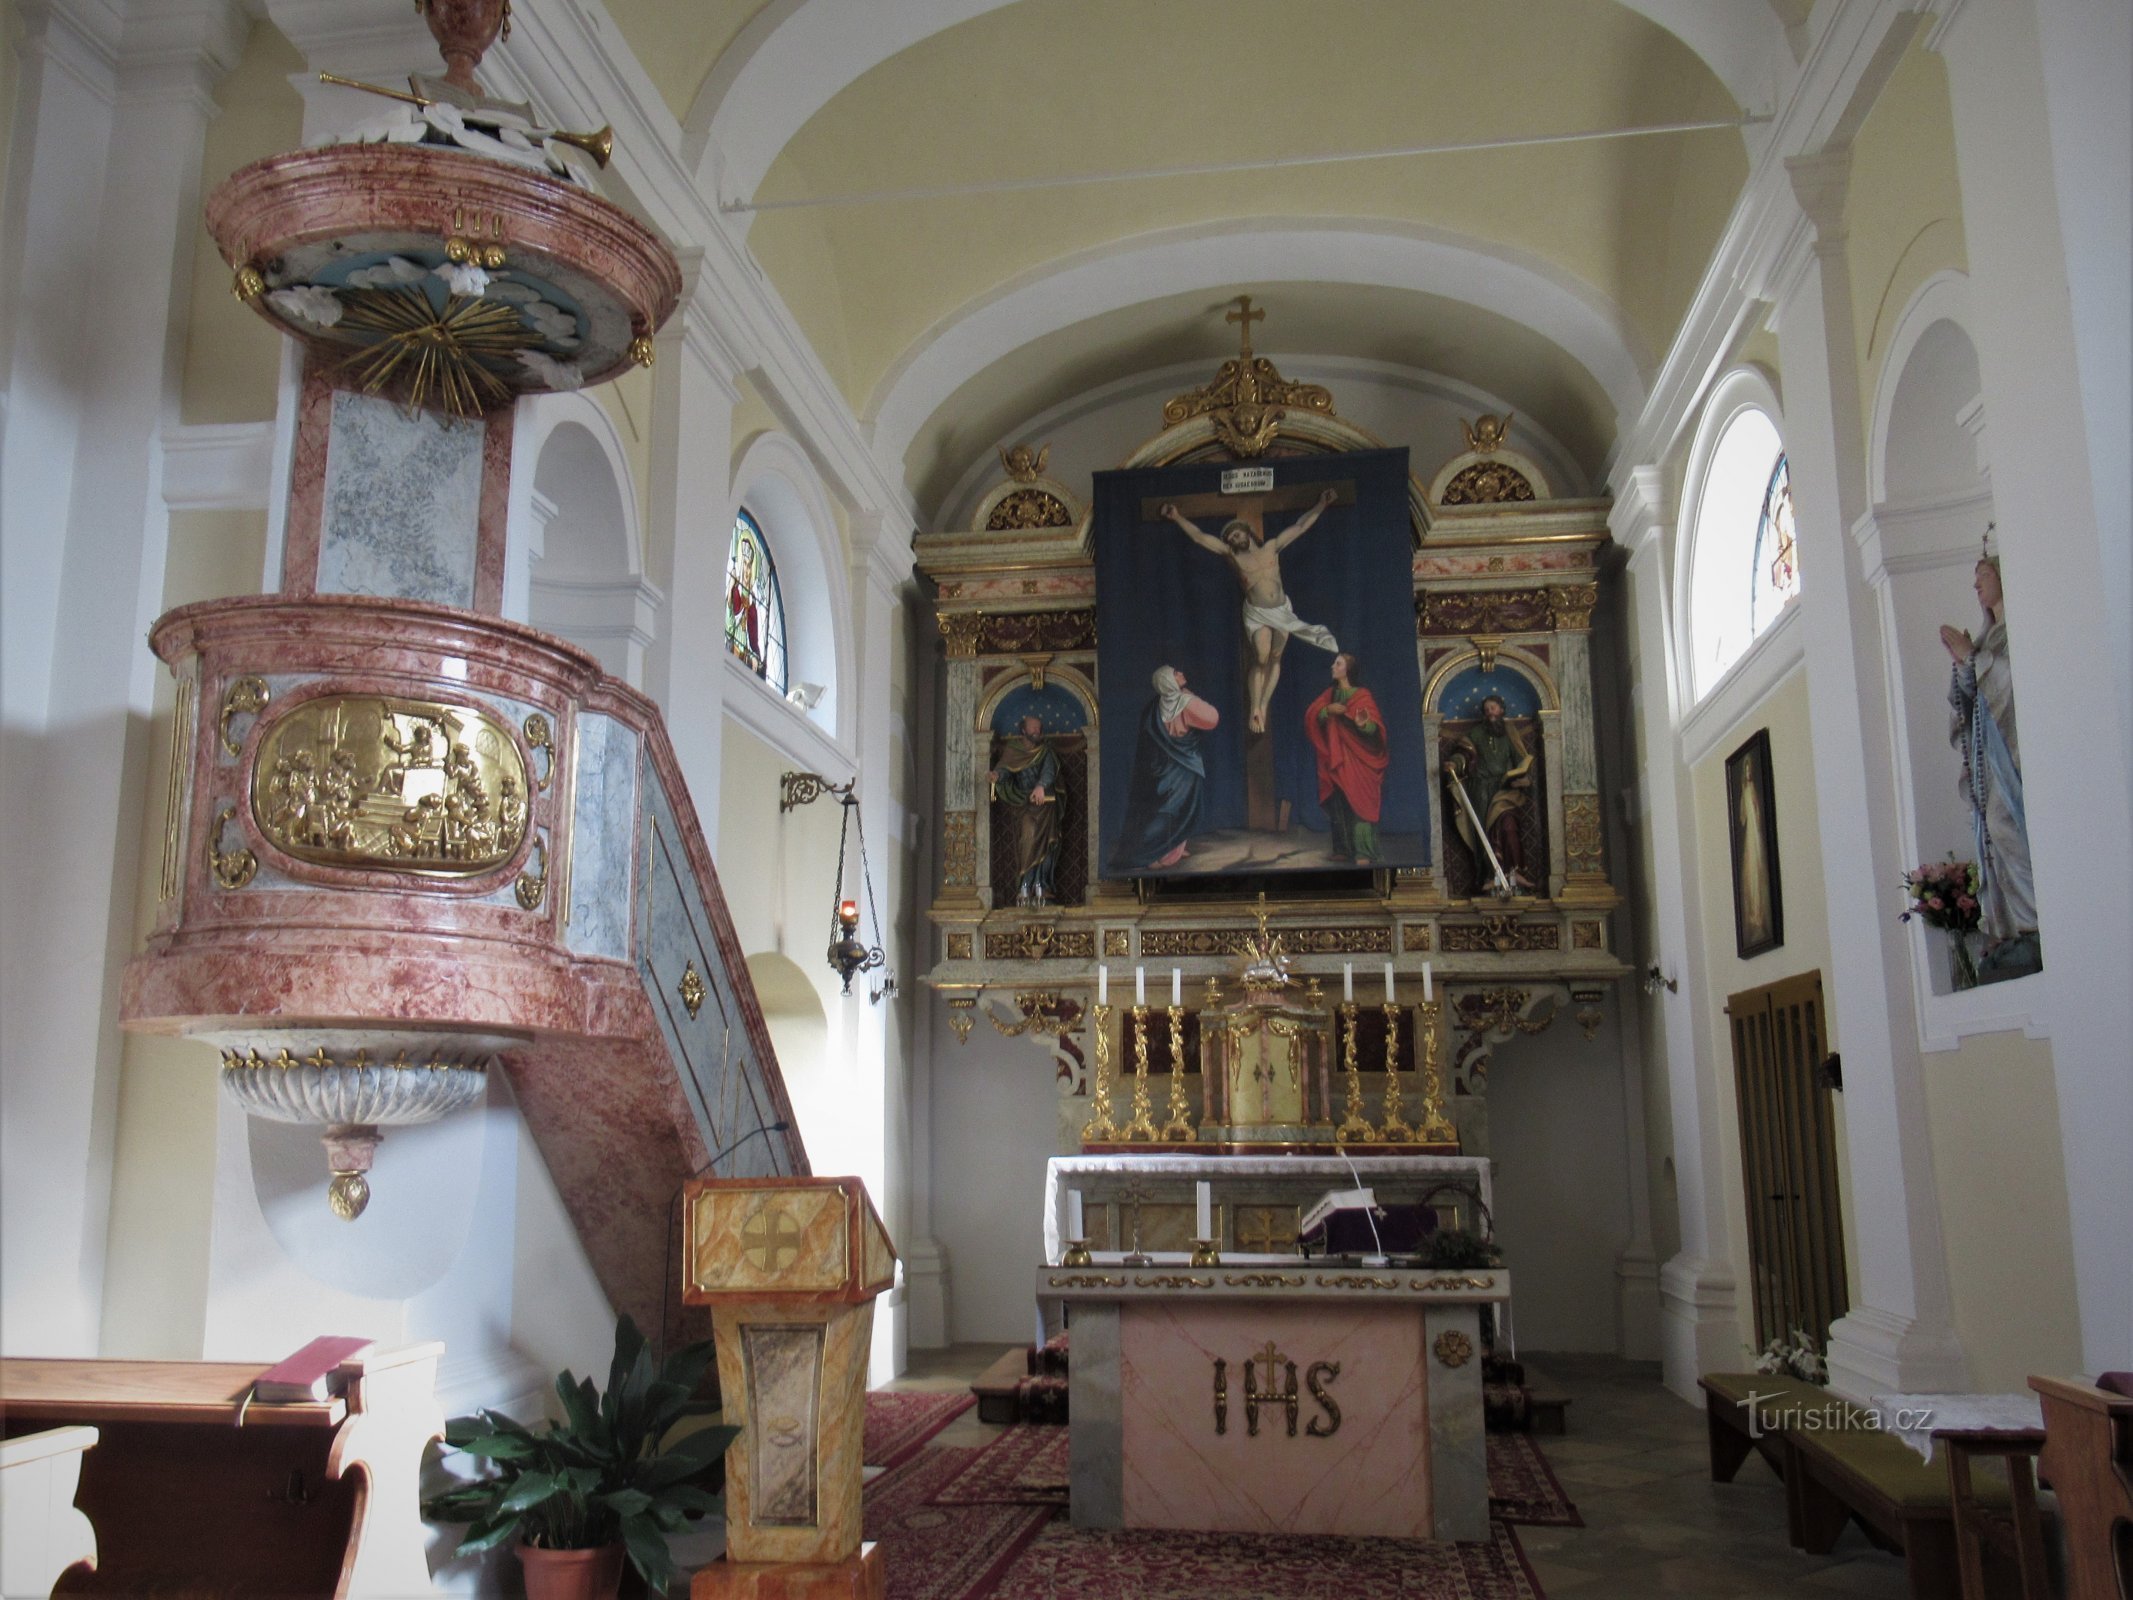 Interior da igreja